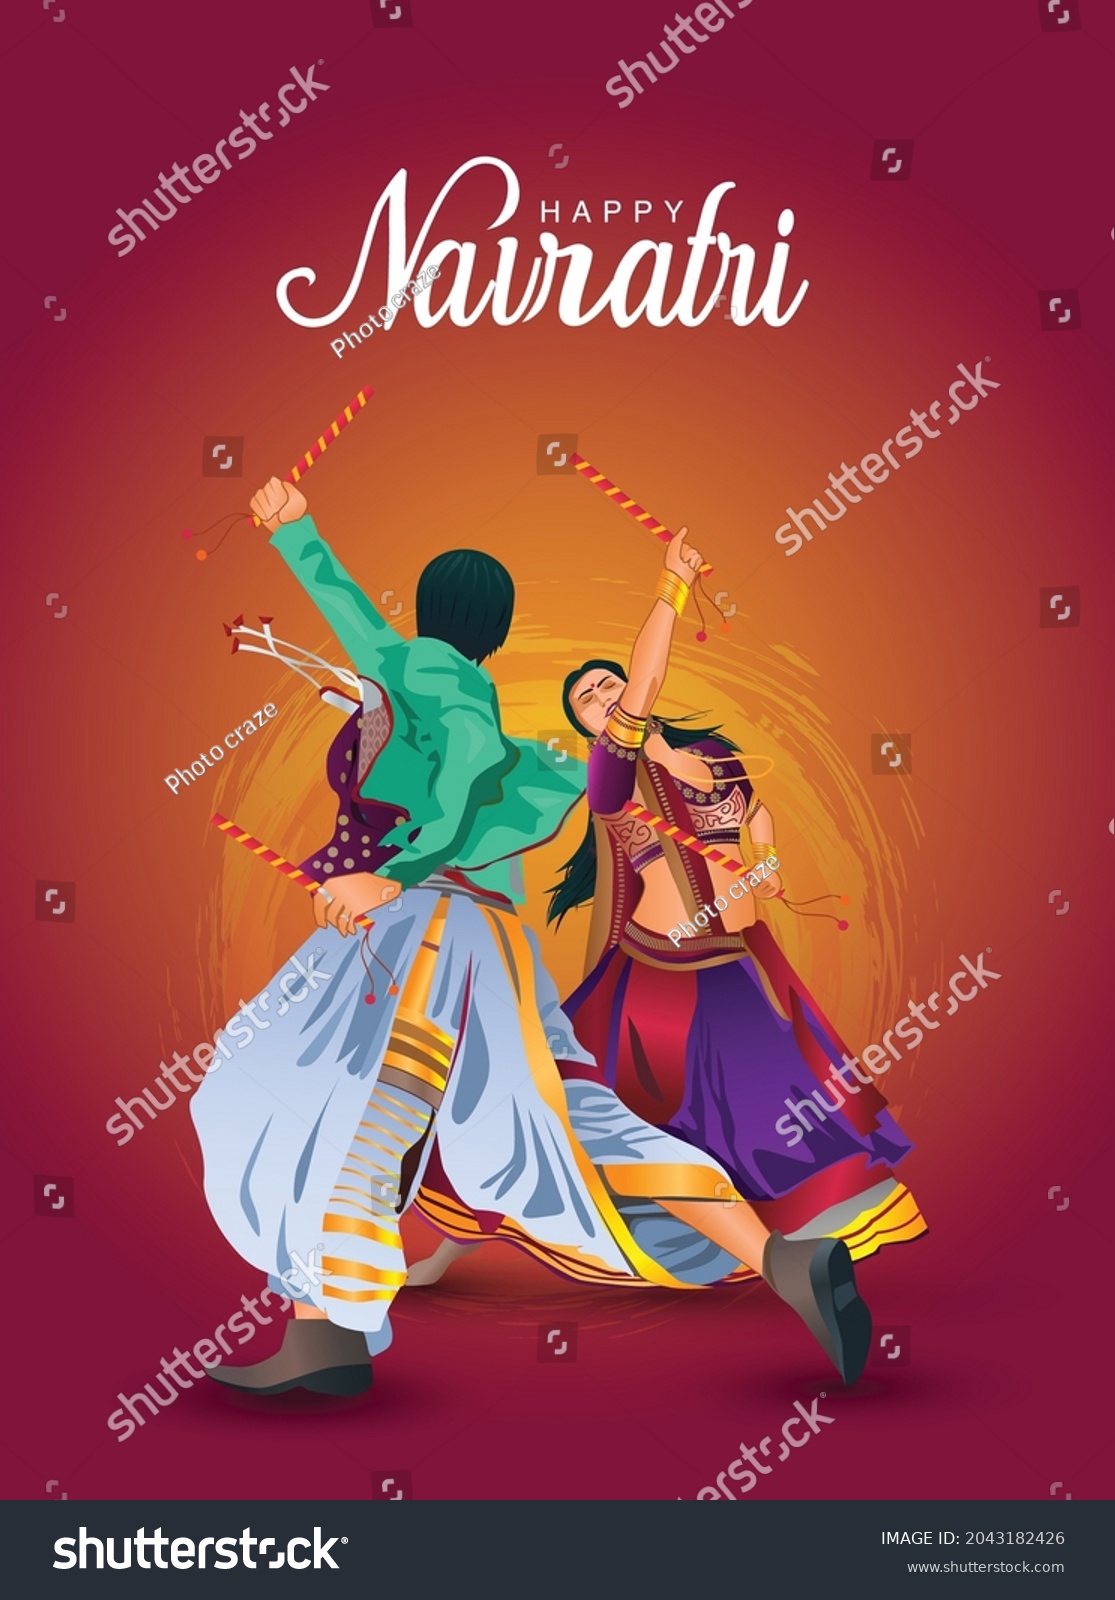 SVG of Garba Night poster for Navratri Dussehra festival of India. vector illustration design  of couple playing Dandiya dance. svg